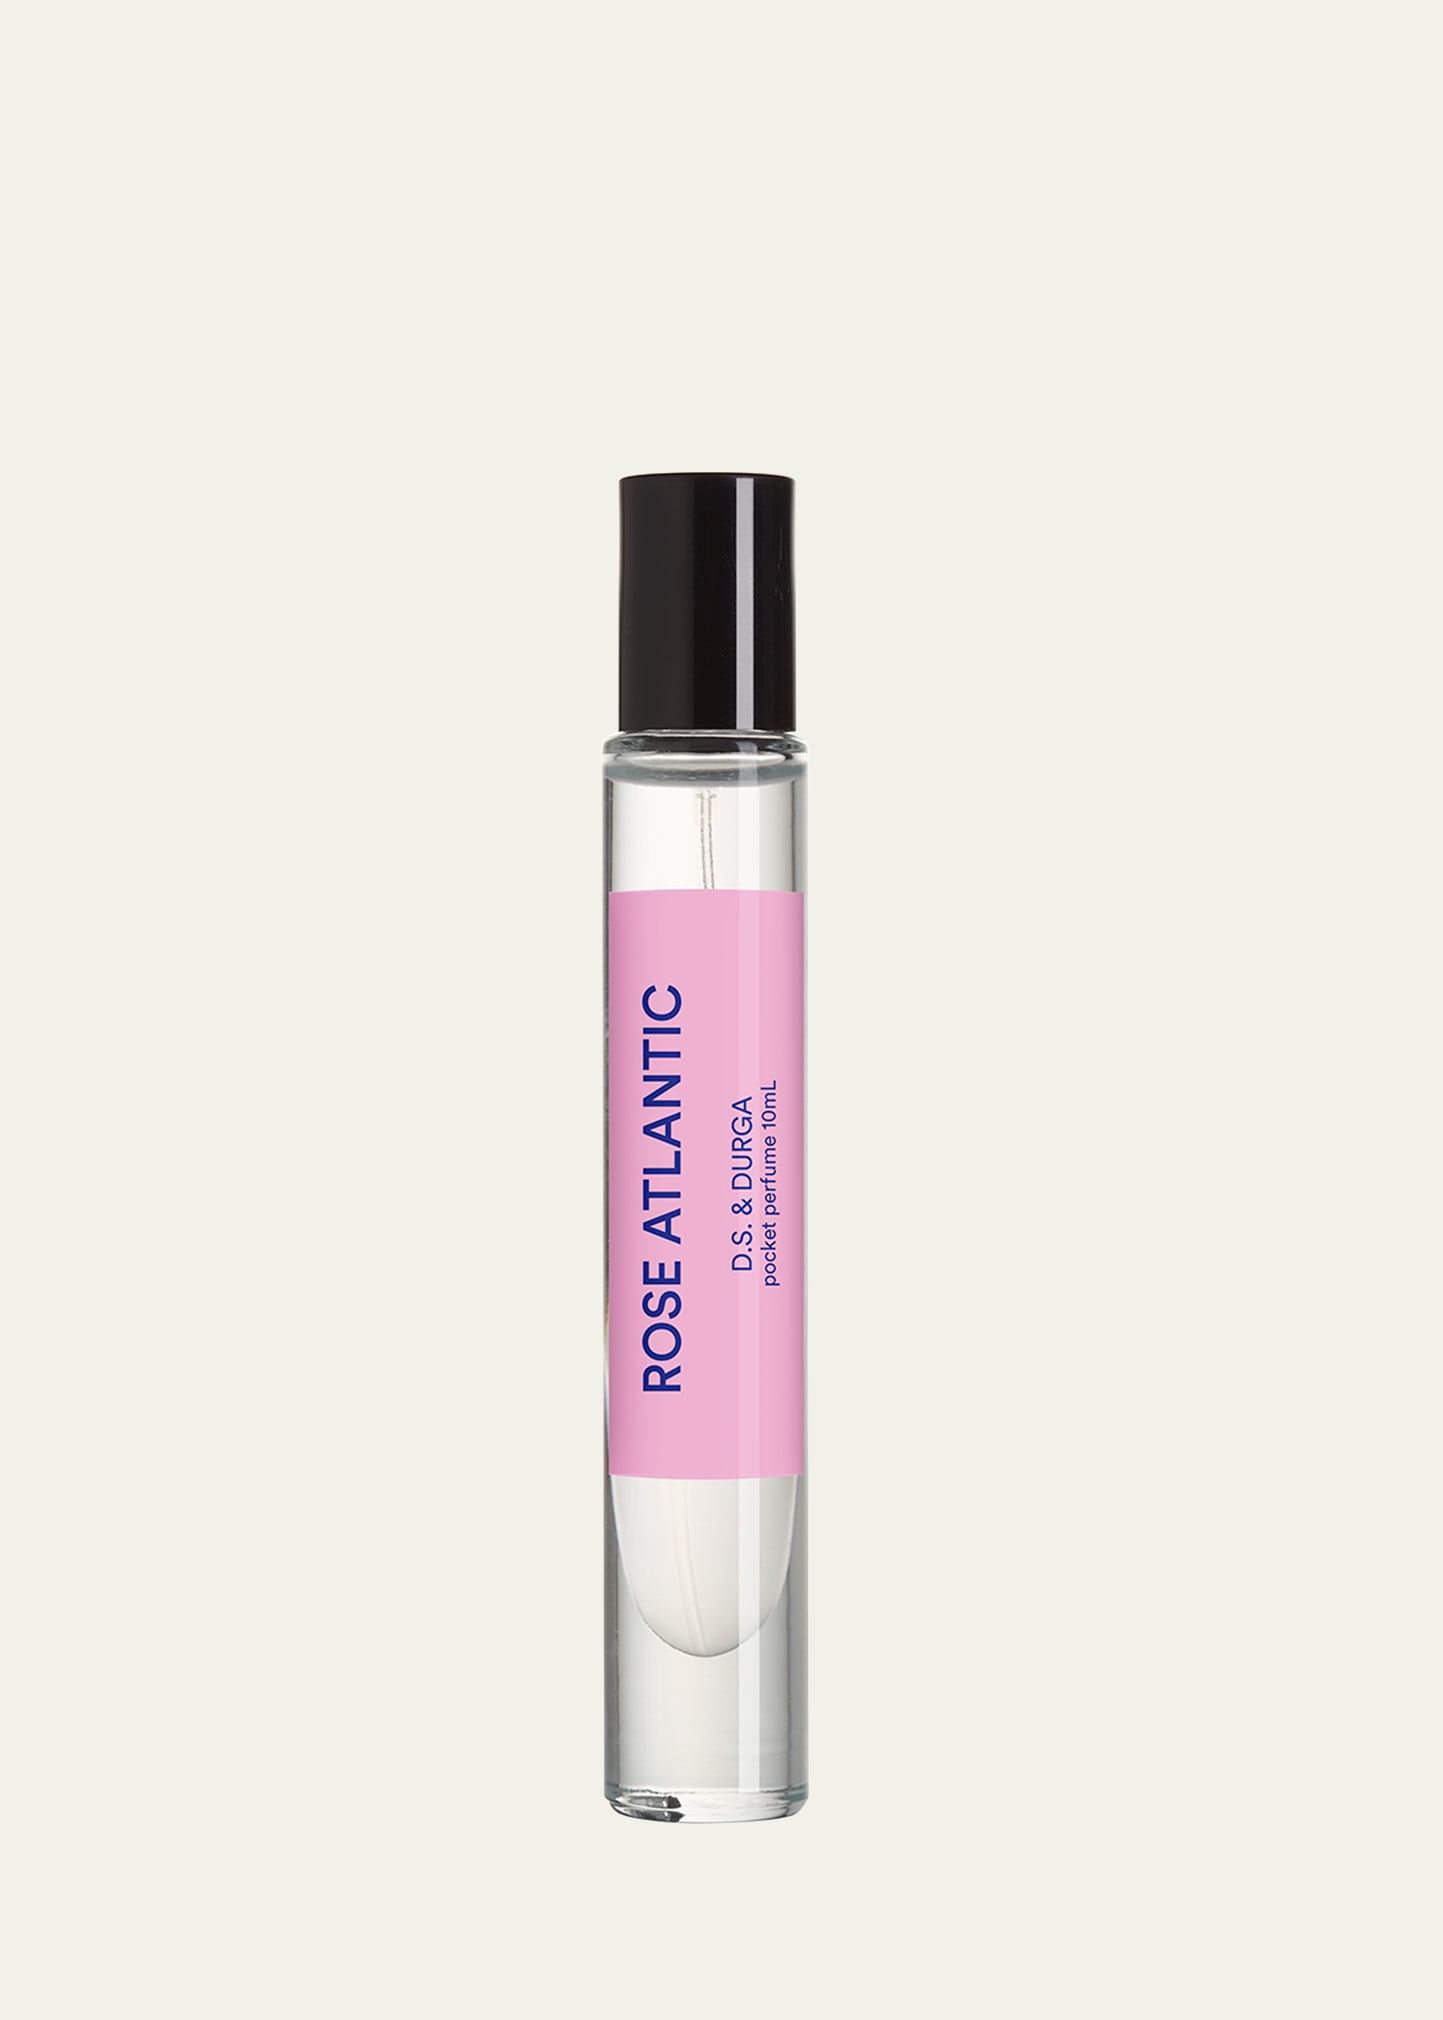 Rose Atlantic Pocket Perfume, 0.33 oz.